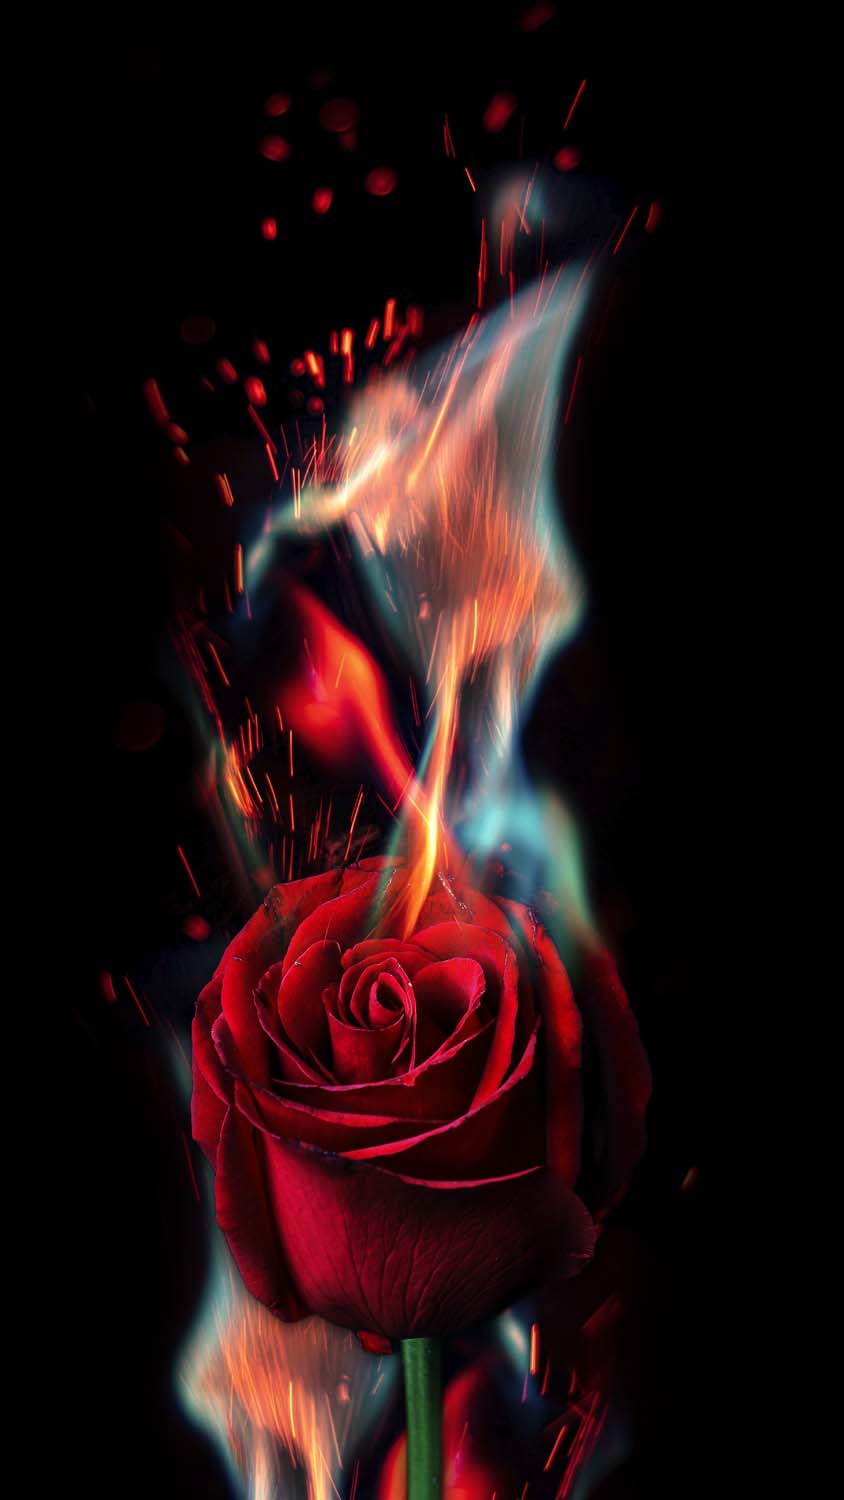 burning rose | Rose wallpaper, Rose on fire, Burning rose